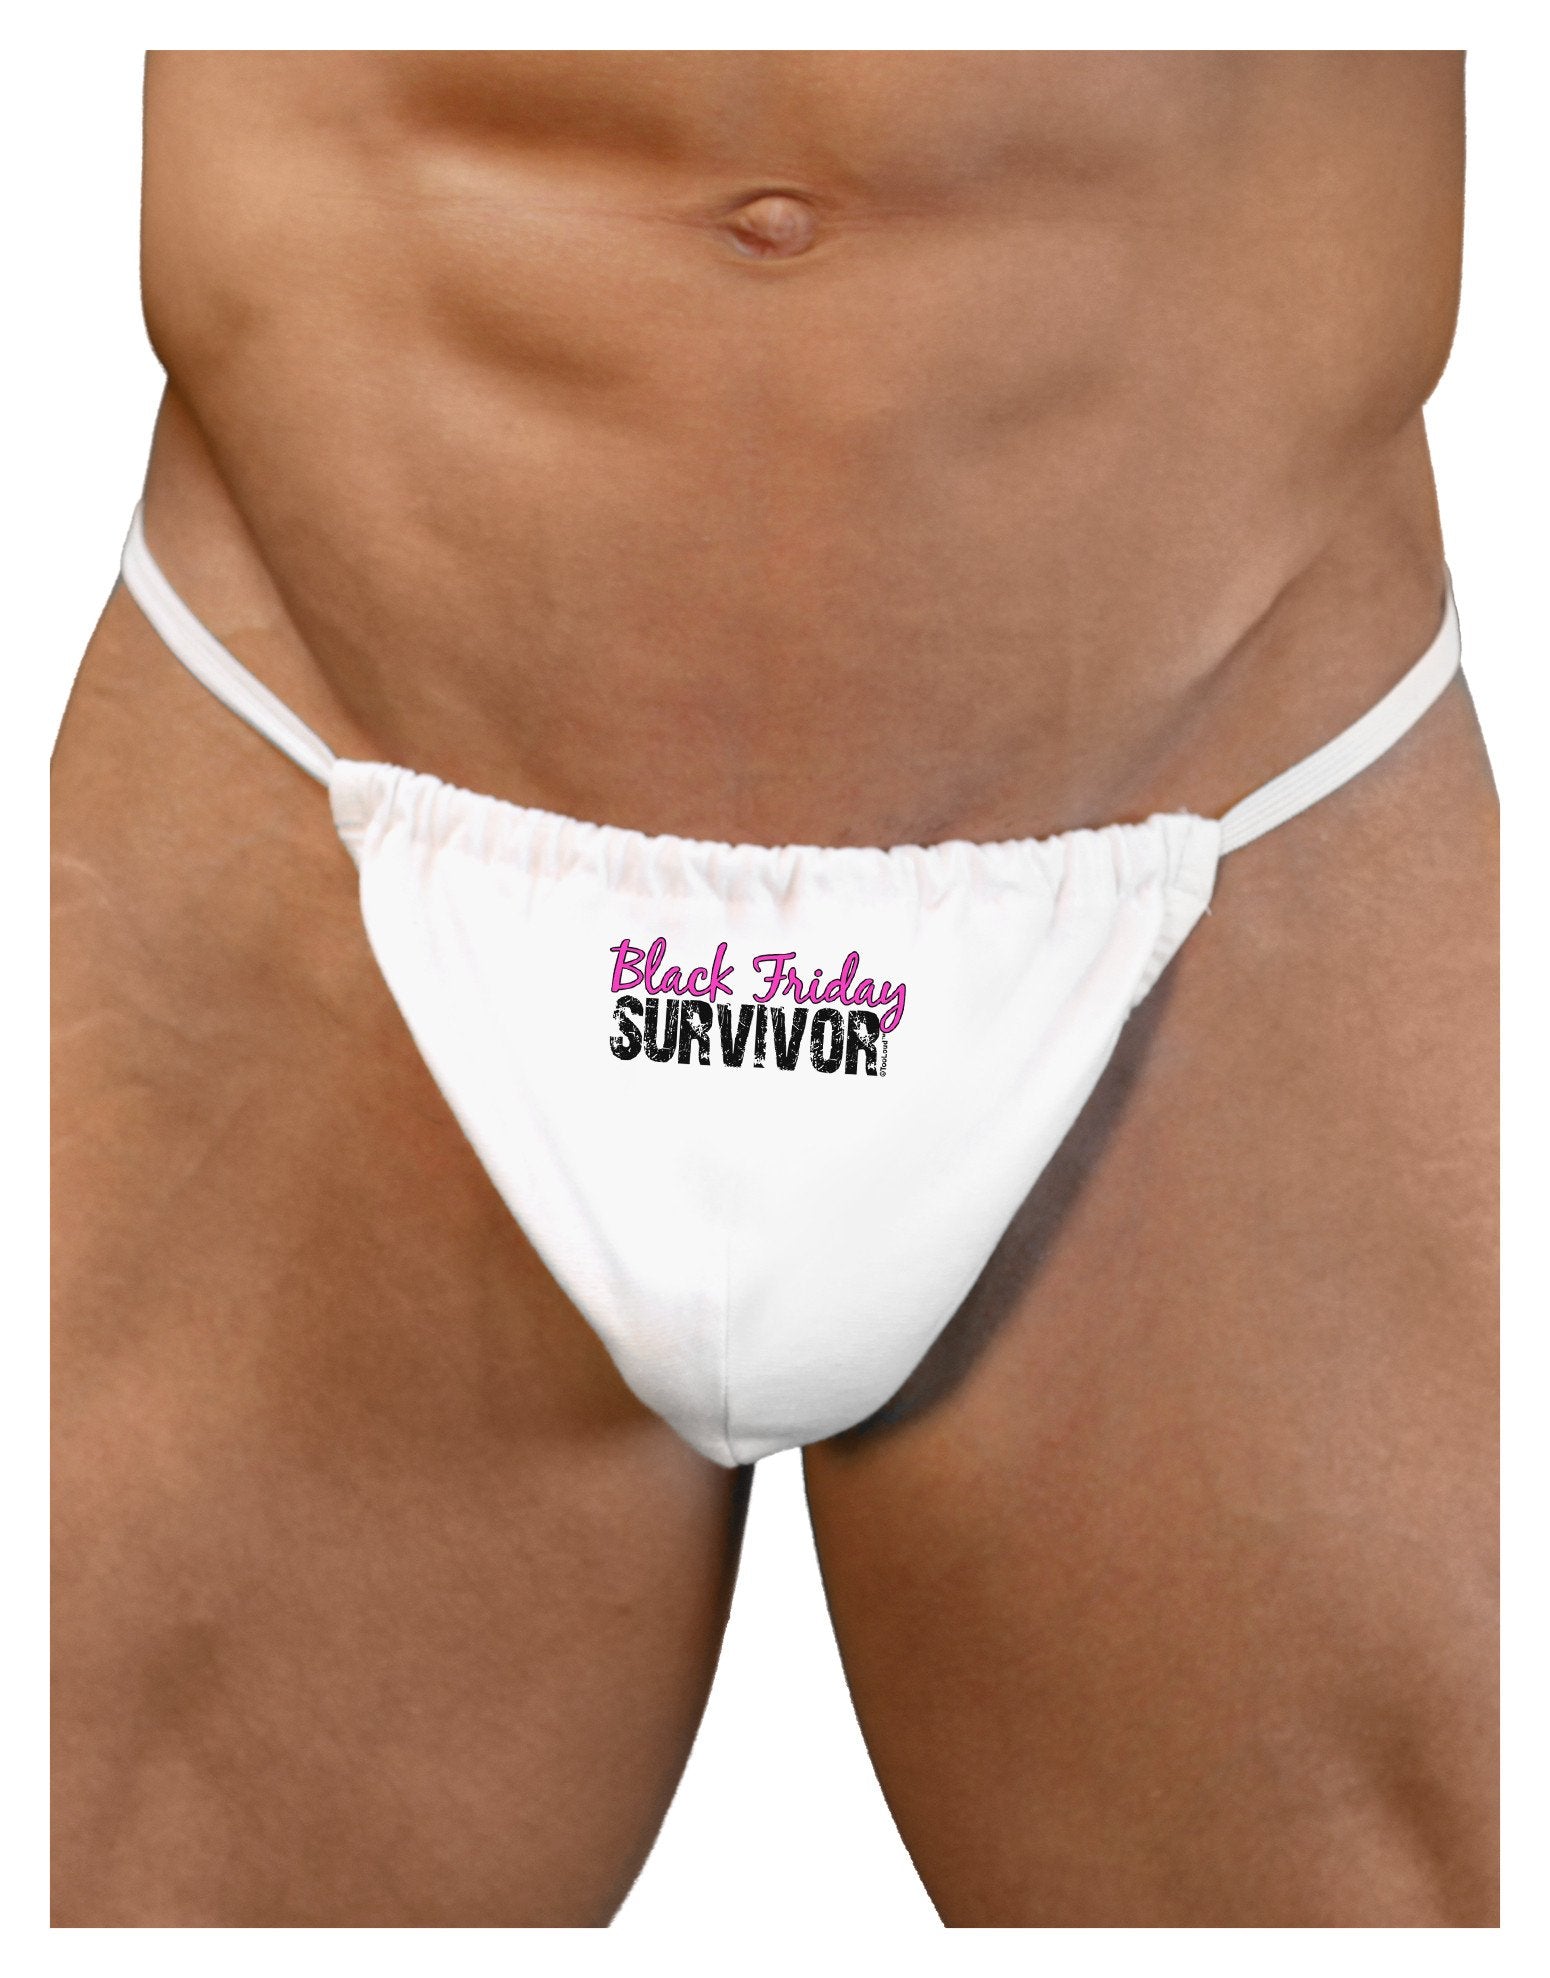 Black Friday Survivor Mens G-String Underwear